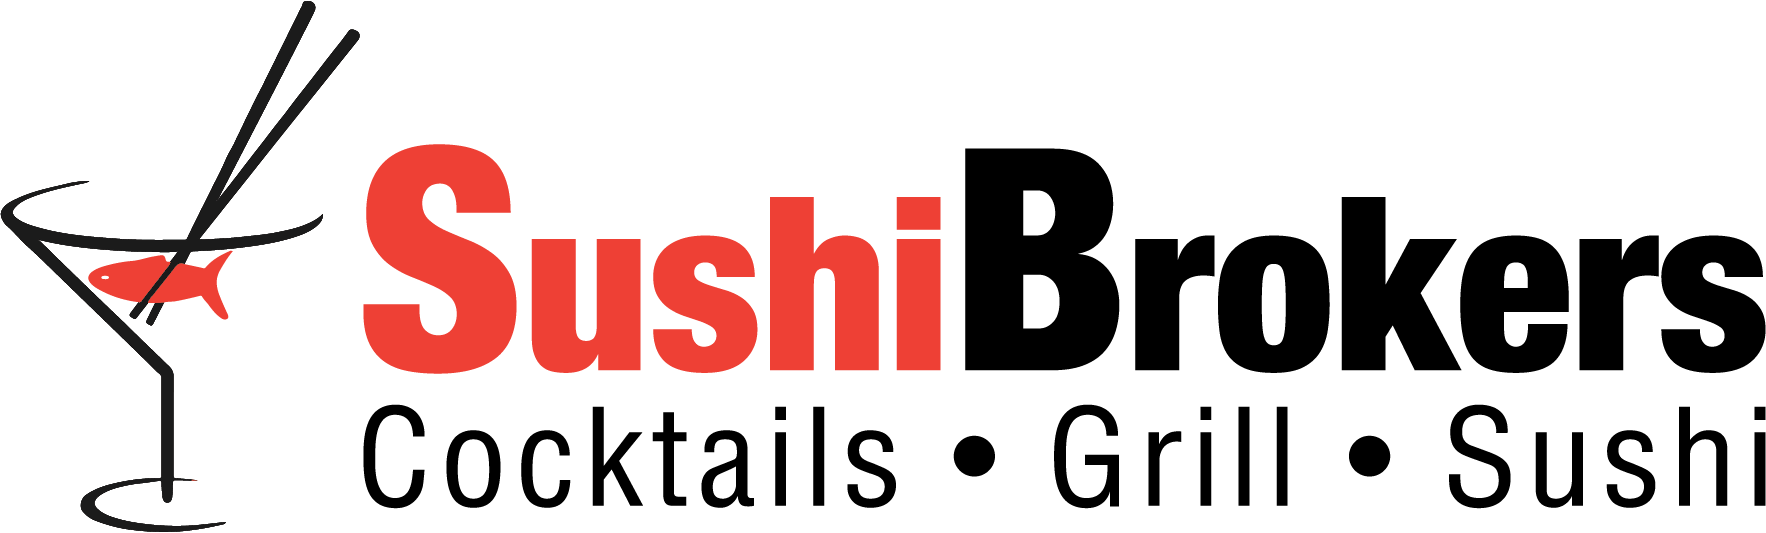 Sushi Brokers - Online Ordering